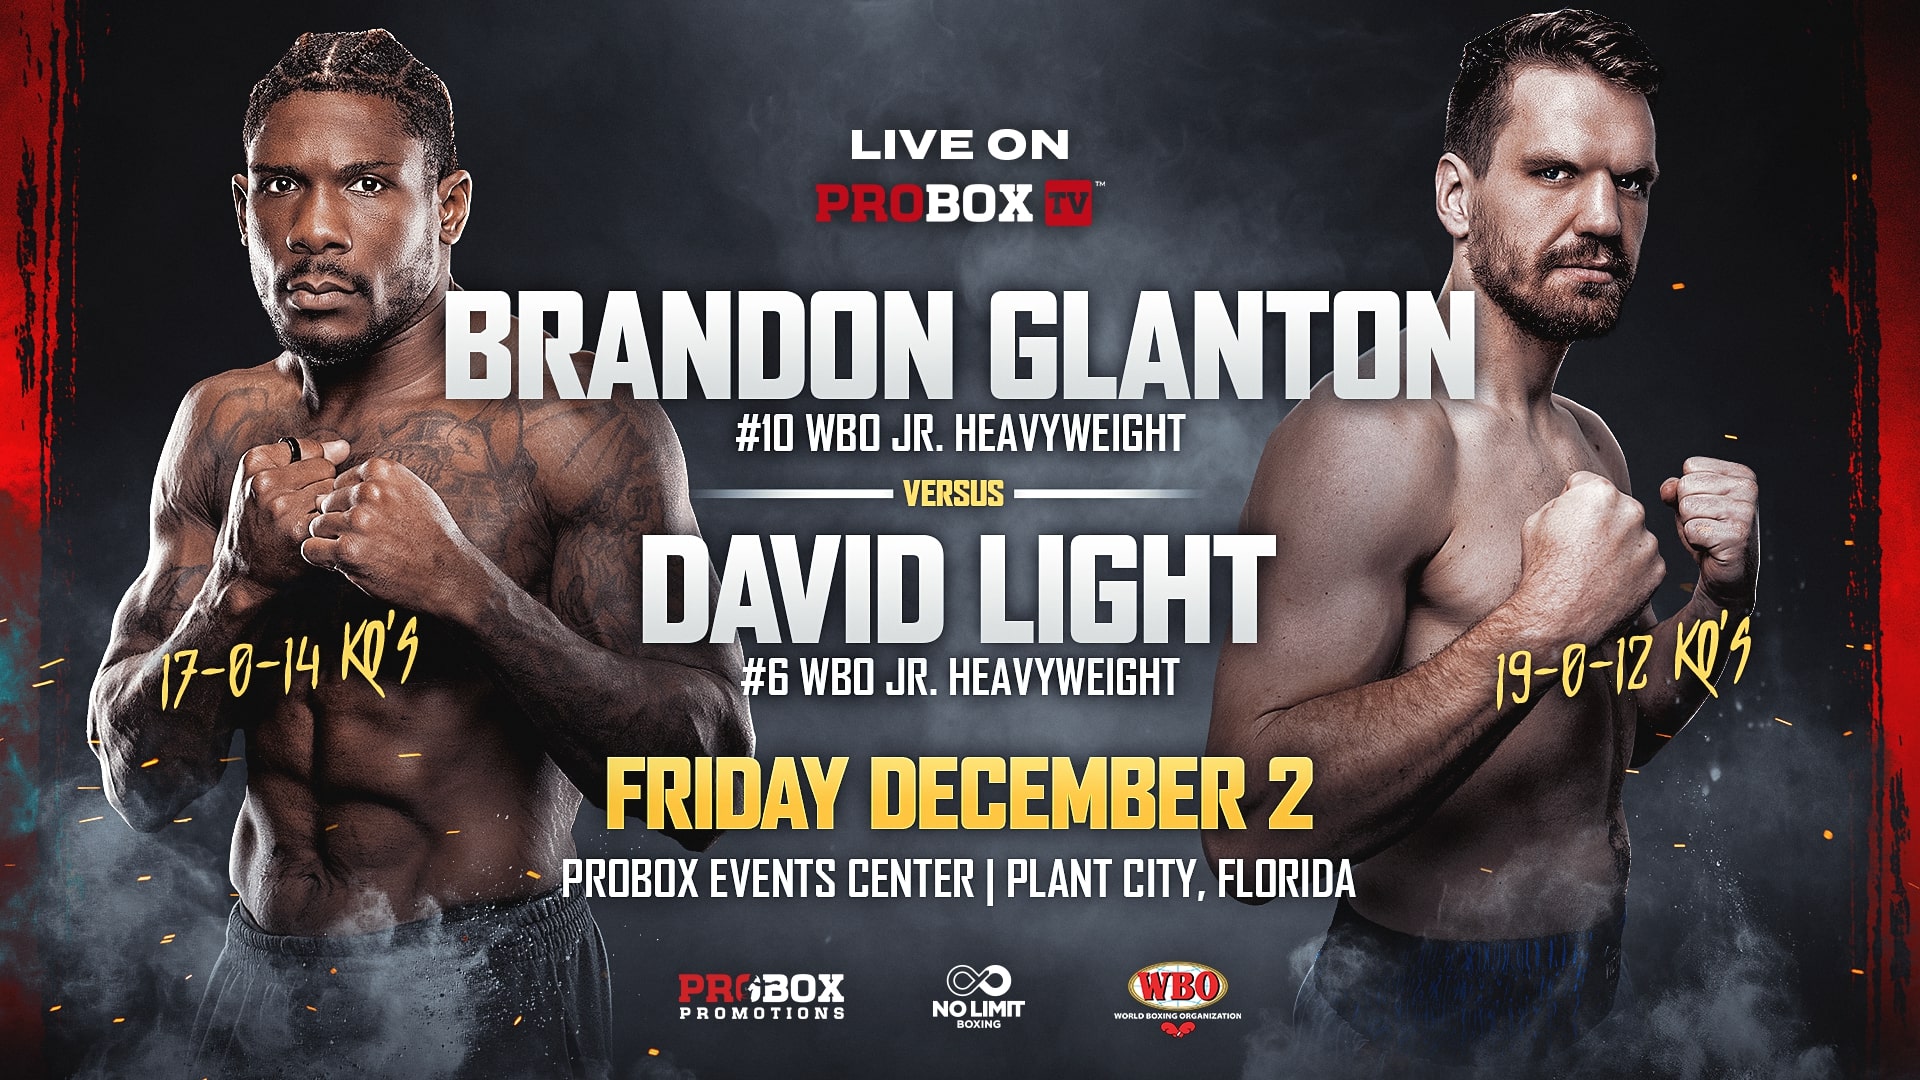 Brandon Glanton vs David Light December 2nd at d ProBox Event Center in Plant City, Florida